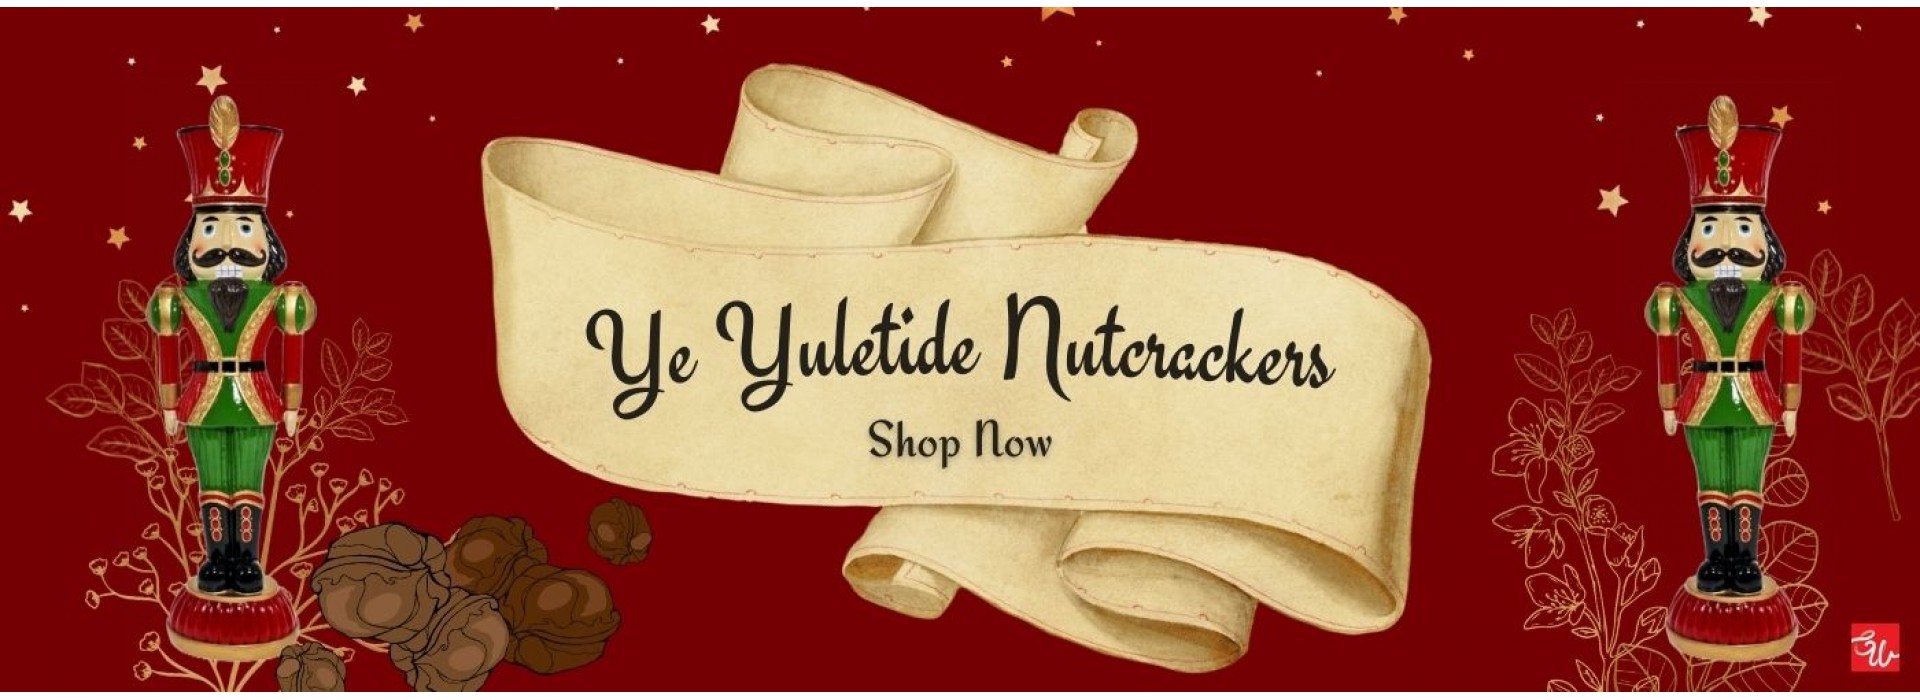 Ye Yuletide Nutcrackers